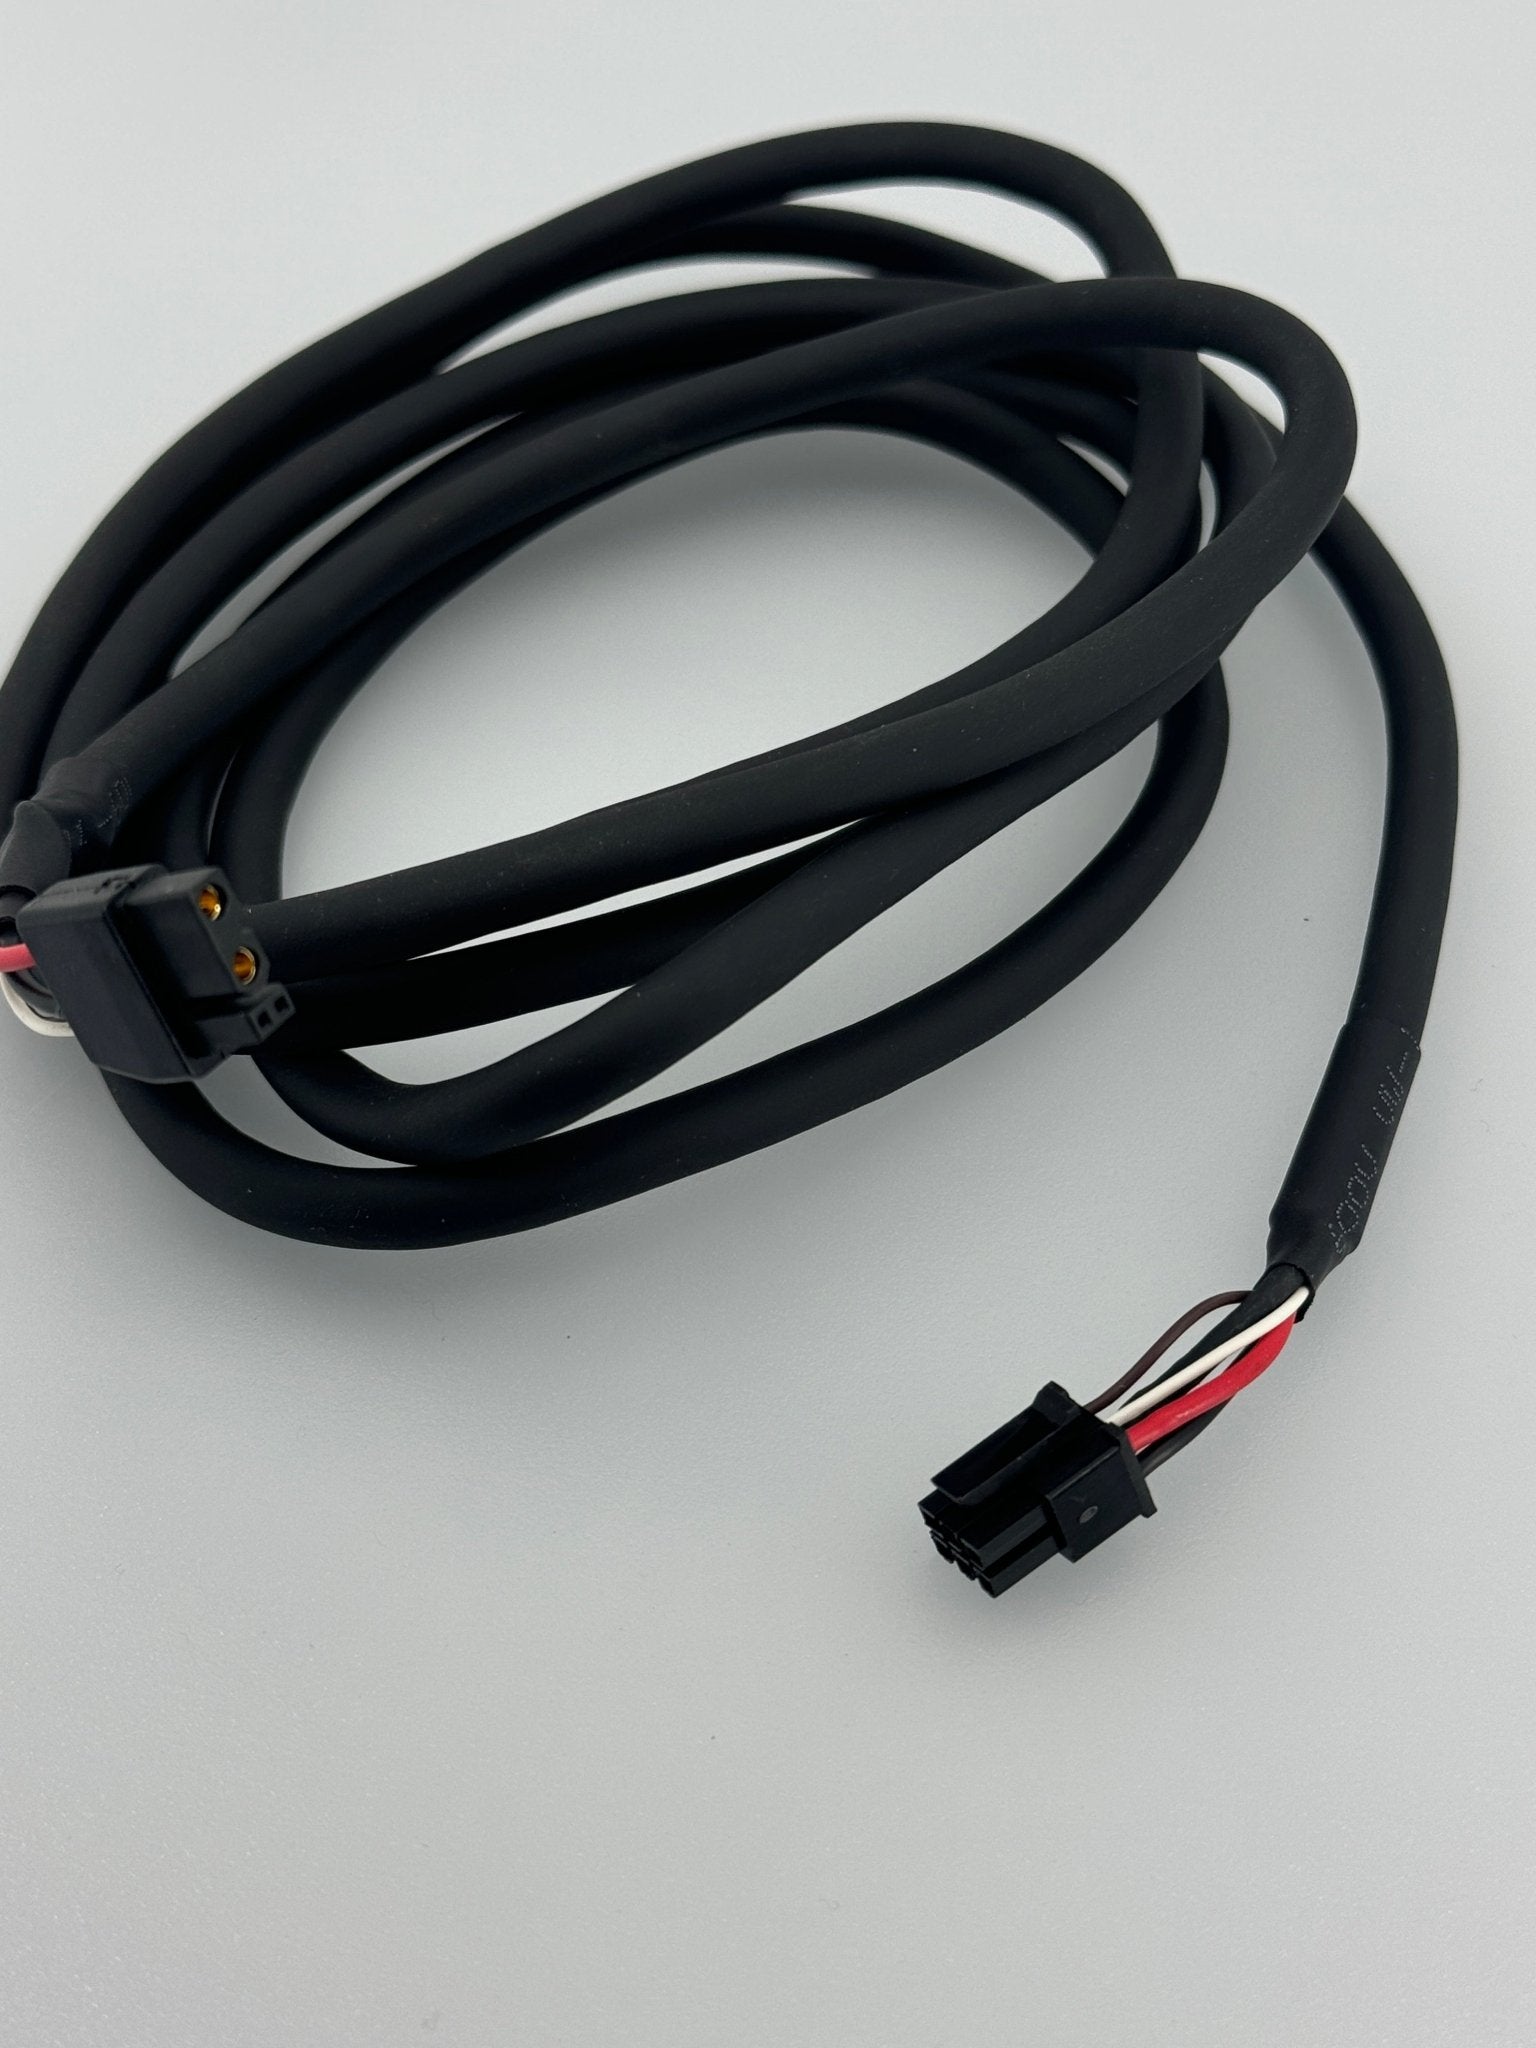 USB / CAN Umbilical Cable - by LDO Motors - Used on Nitehawk 36 and Nitehawk SB - West3D 3D Printing Supplies - LDO Motors